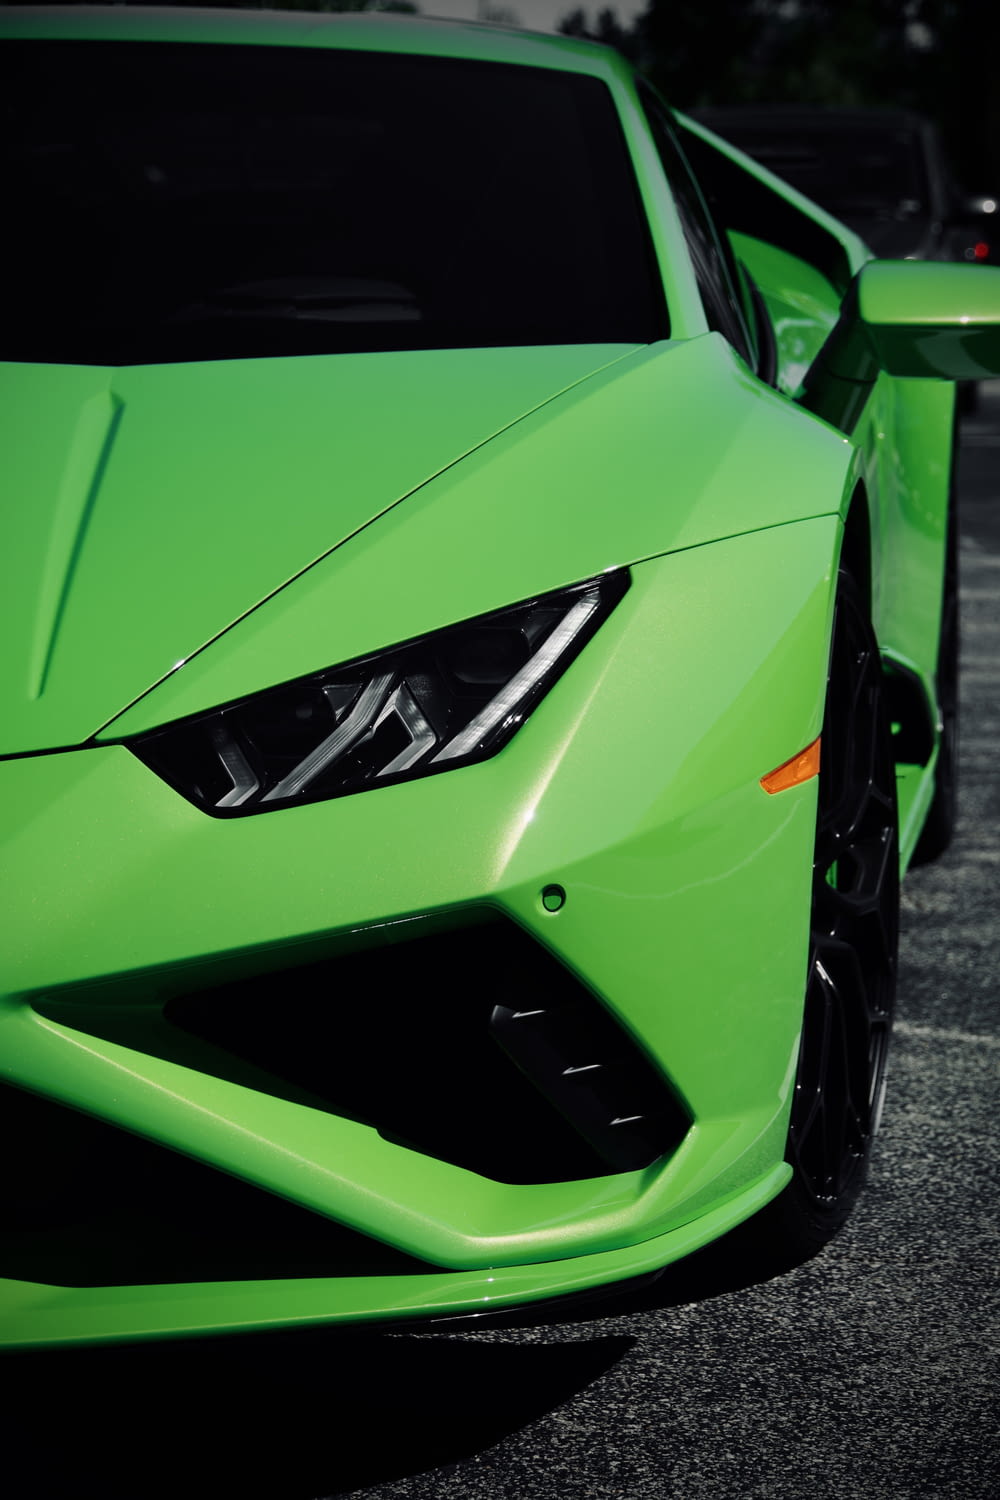 Grüner Lamborghini Aventador tagsüber auf grauer Asphaltstraße geparkt